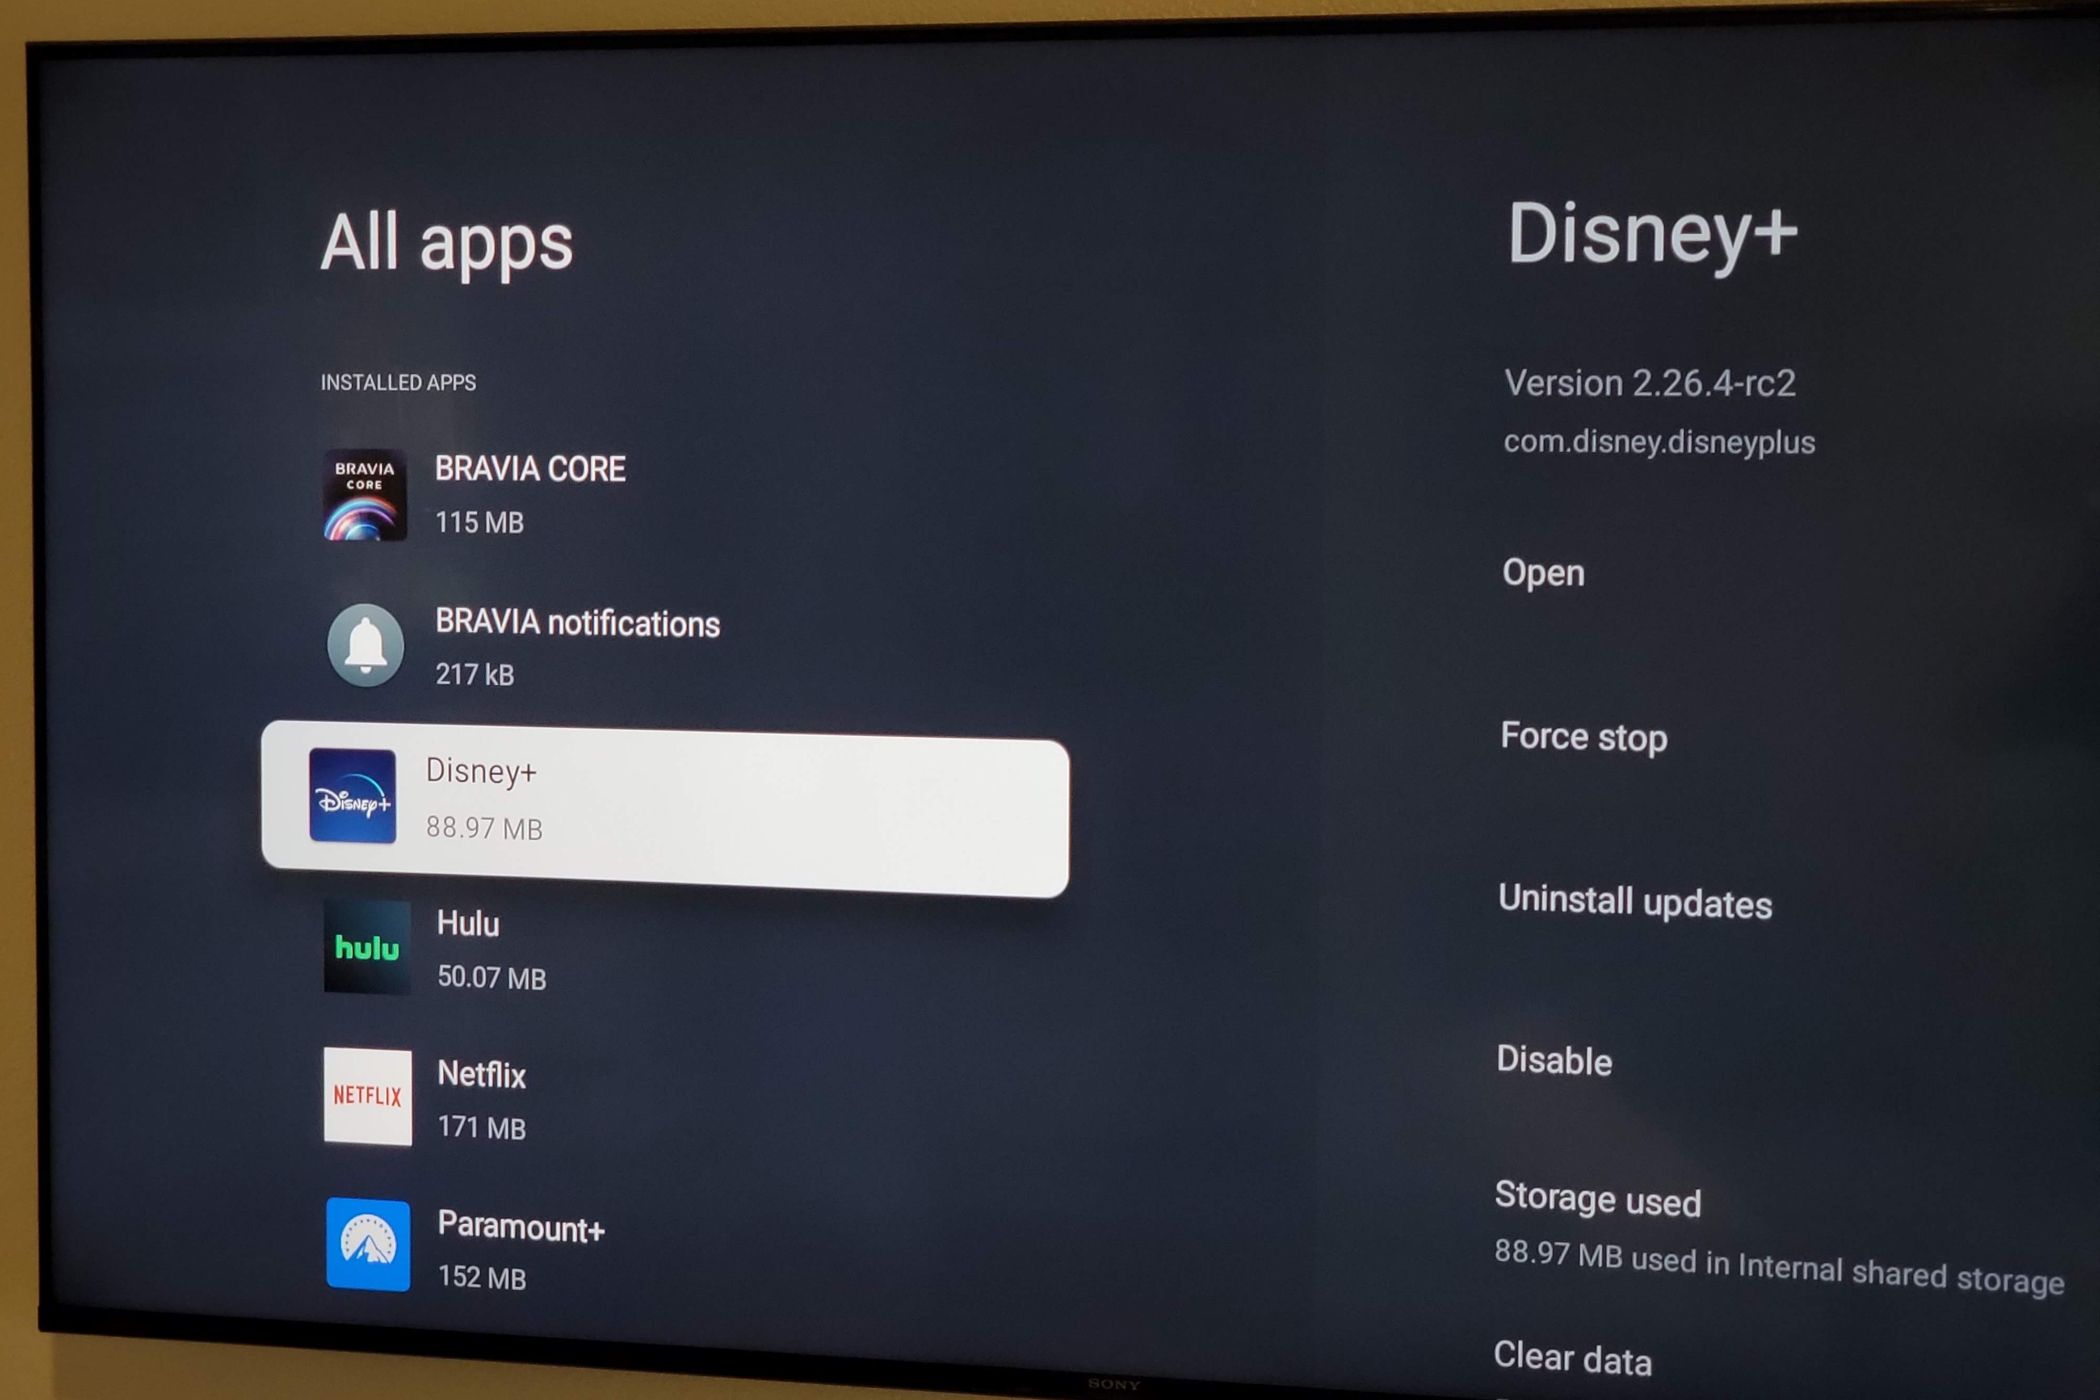 Google TV all apps list in settings. 